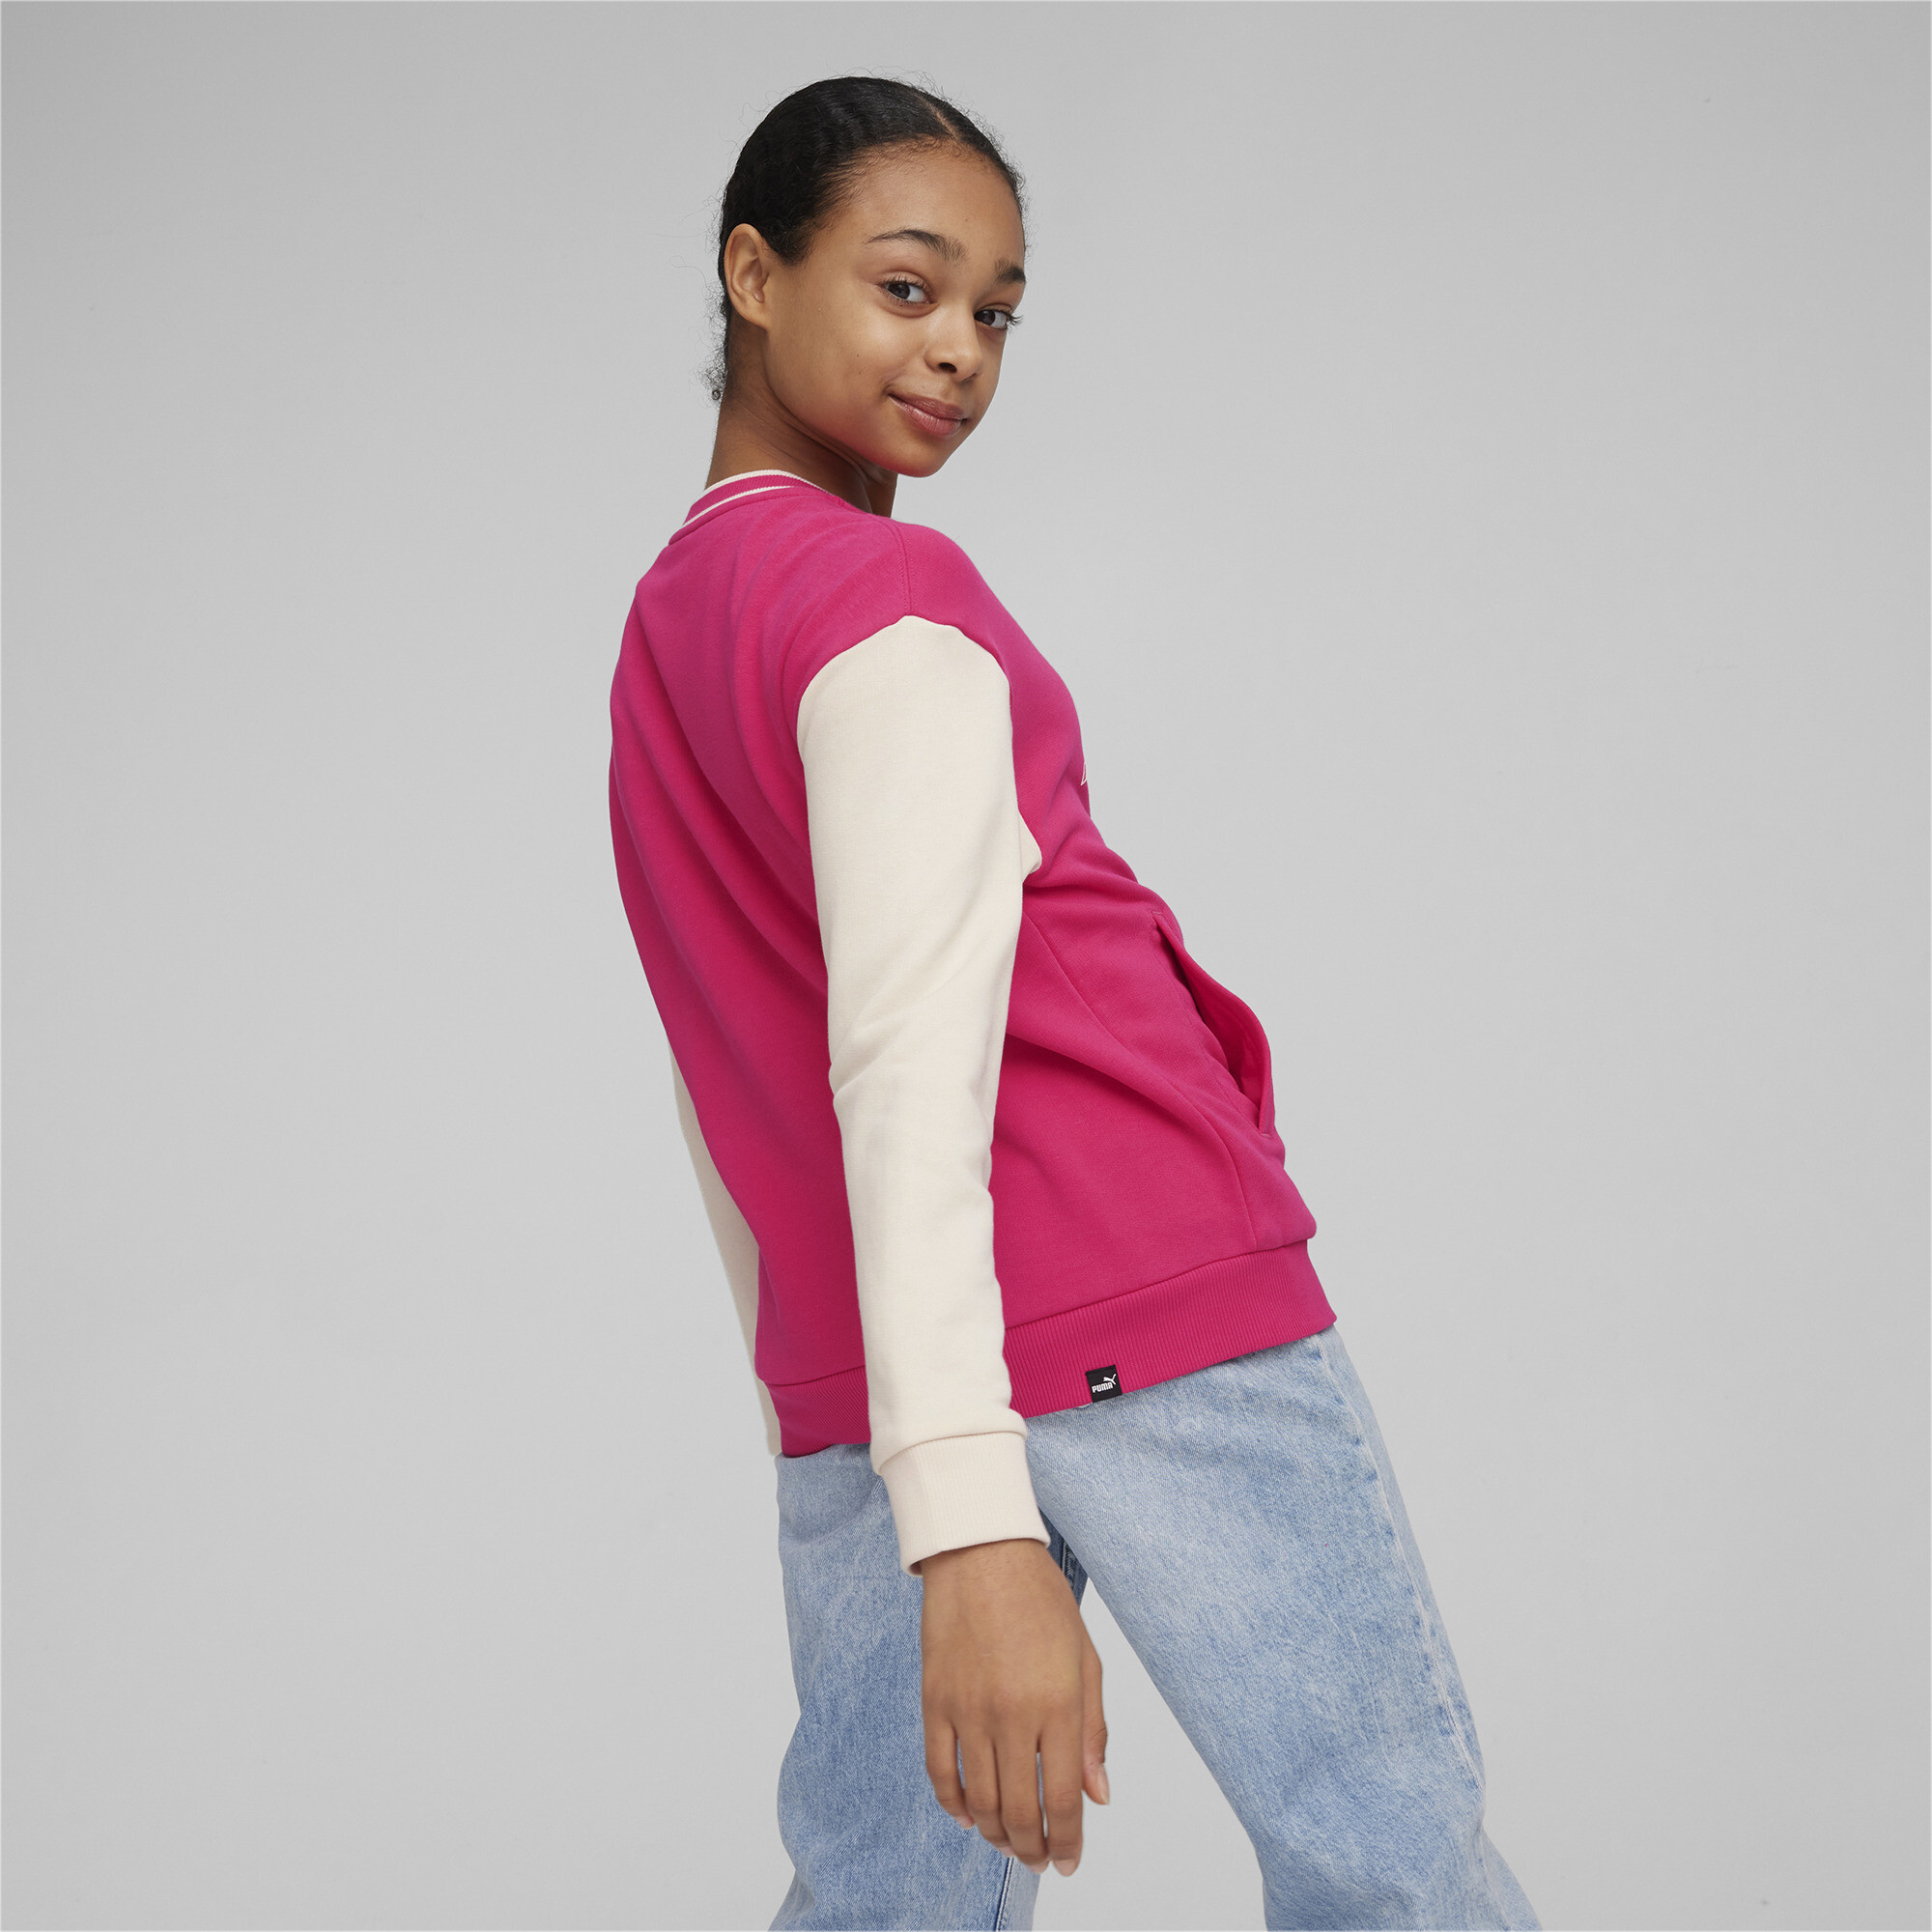 Women's Puma SQUAD Youth Jacket, Pink, Size 9-10Y, Clothing